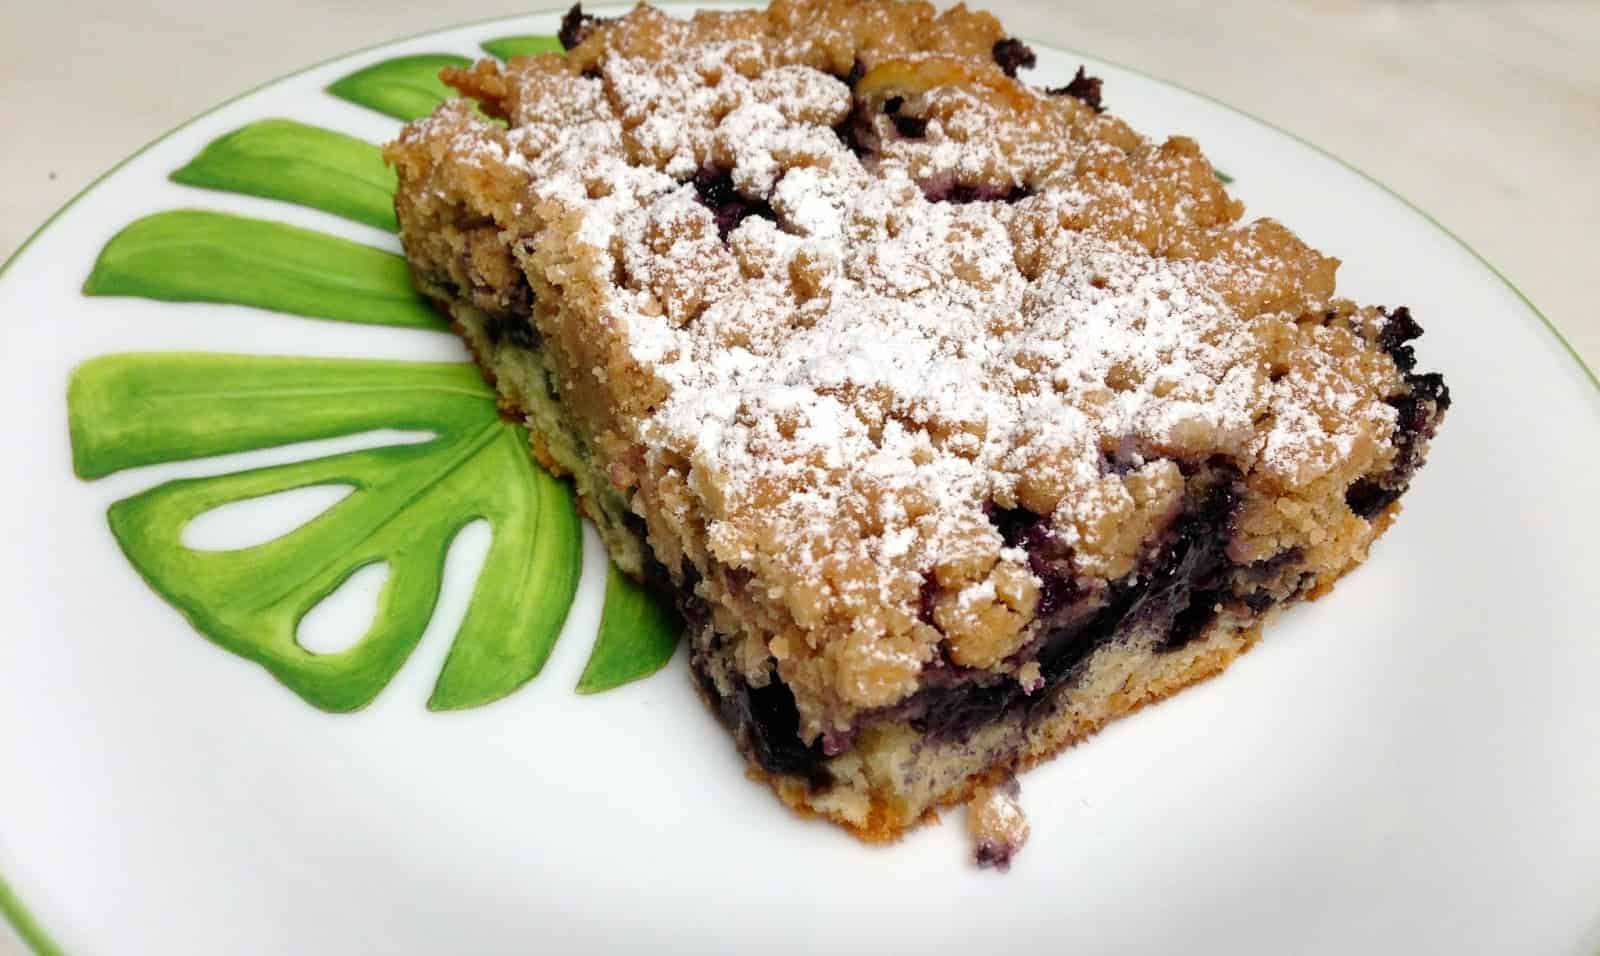 Blueberry Crumb Cake from John Barricelli’s "The Seasonal Baker"